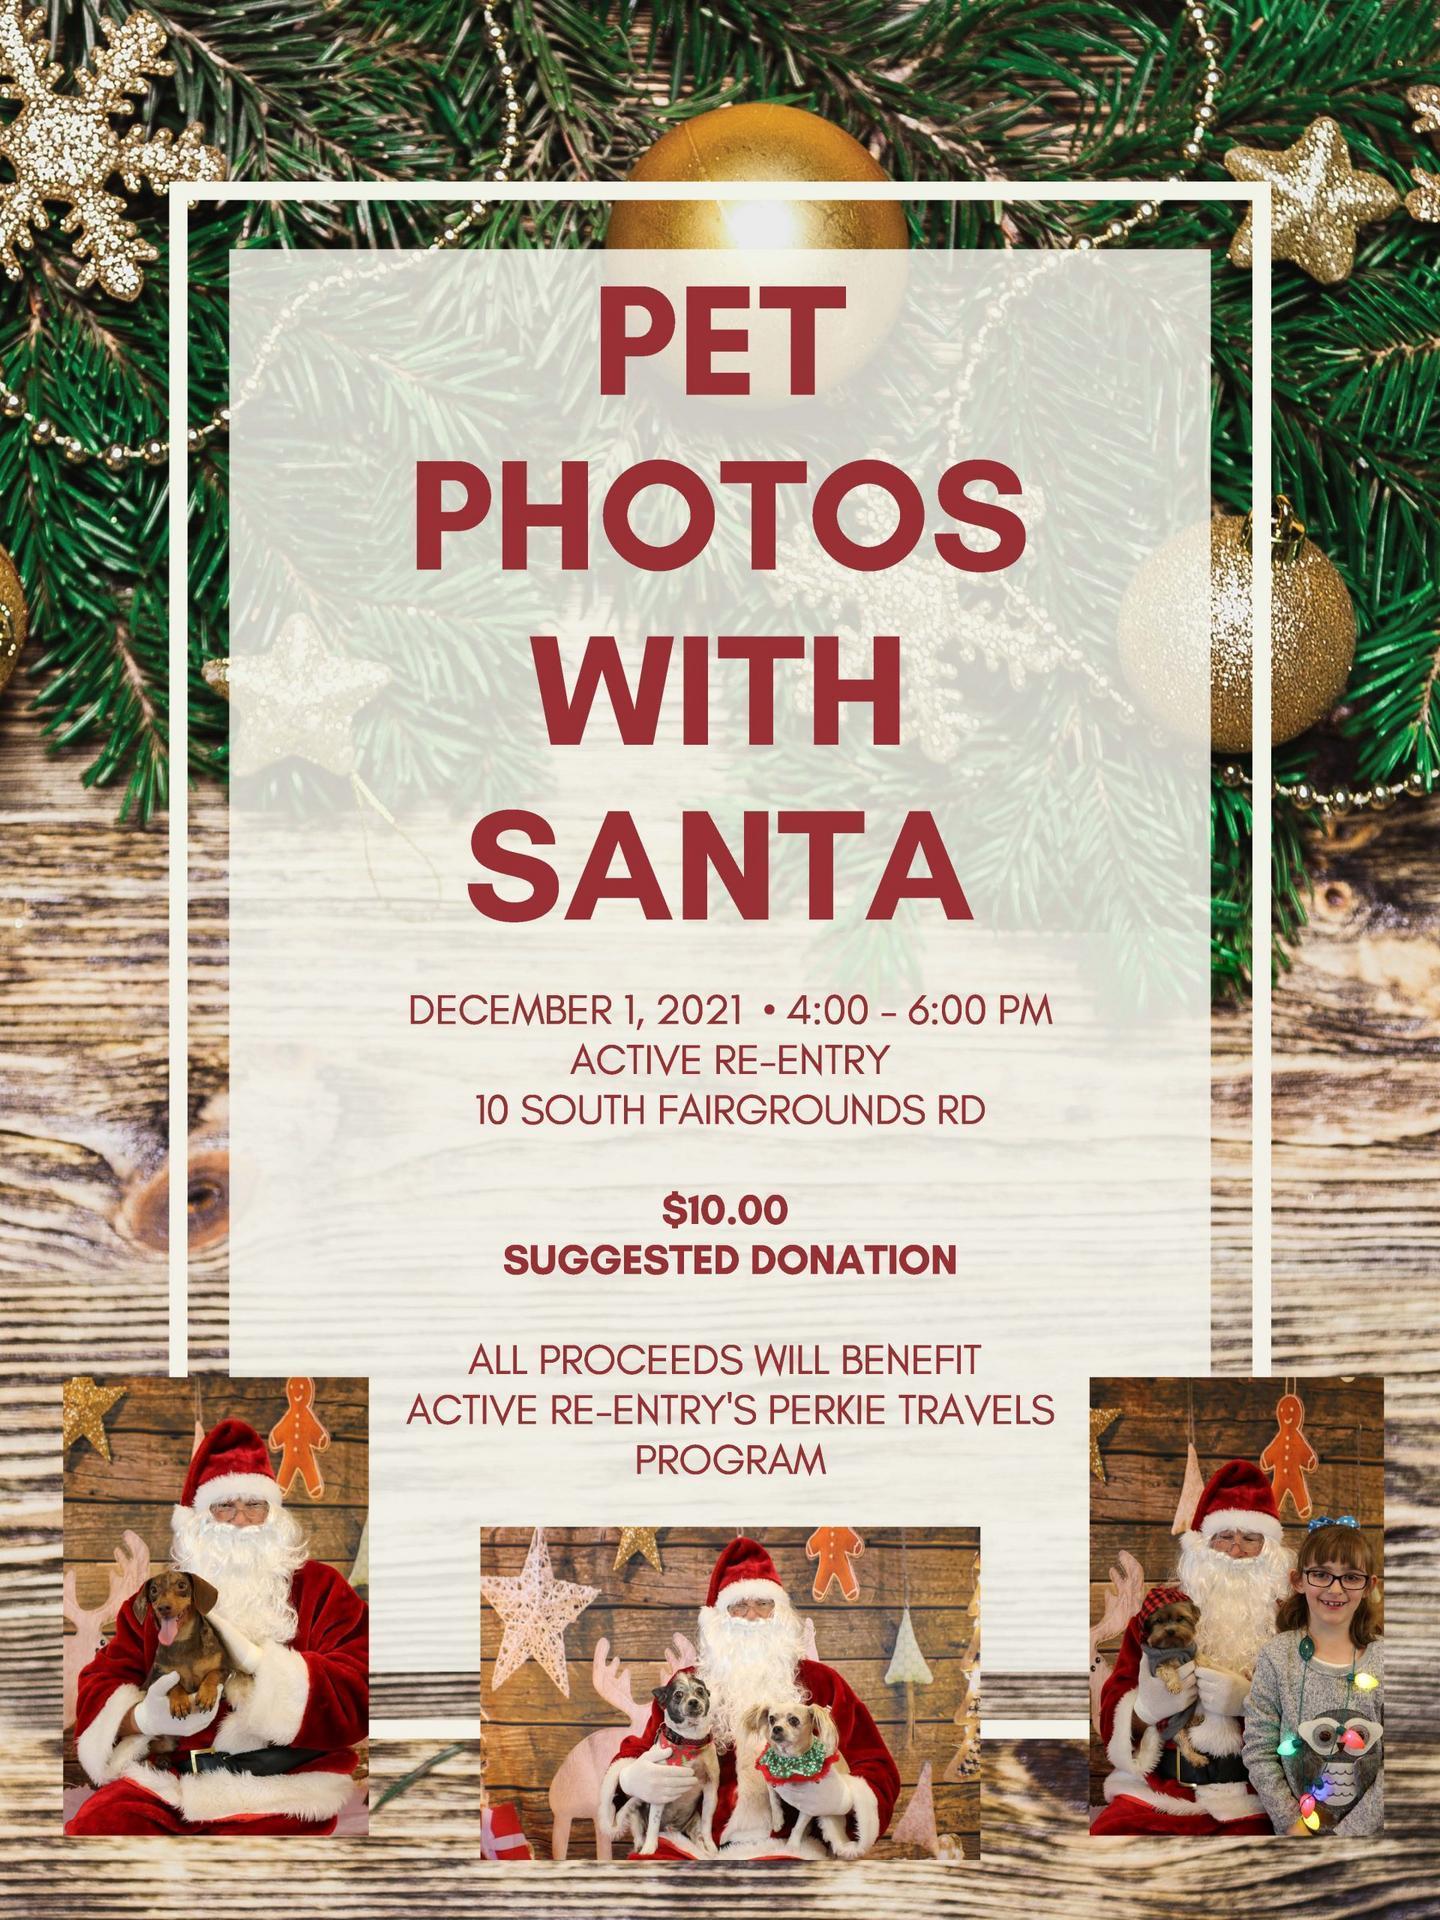 Pet-Photos-with-Santa4-scaled.jpg